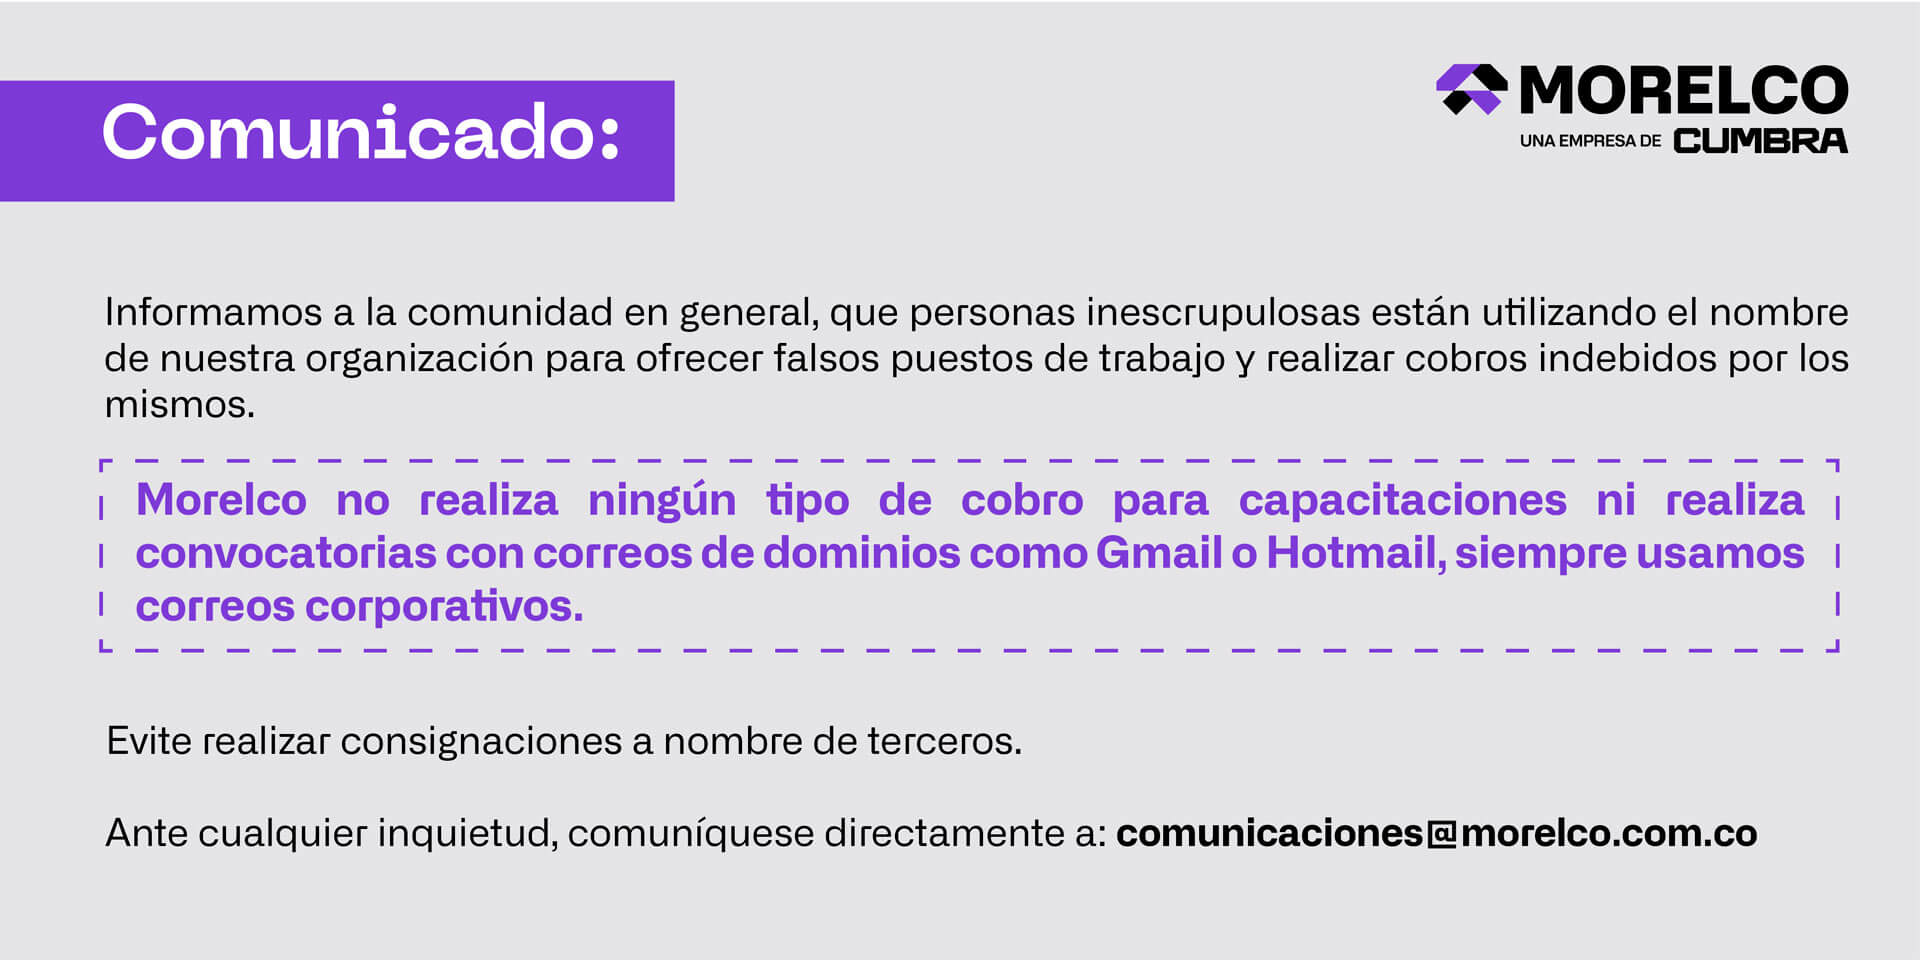 Comunicado de Morelco, una empresa de Cumbra